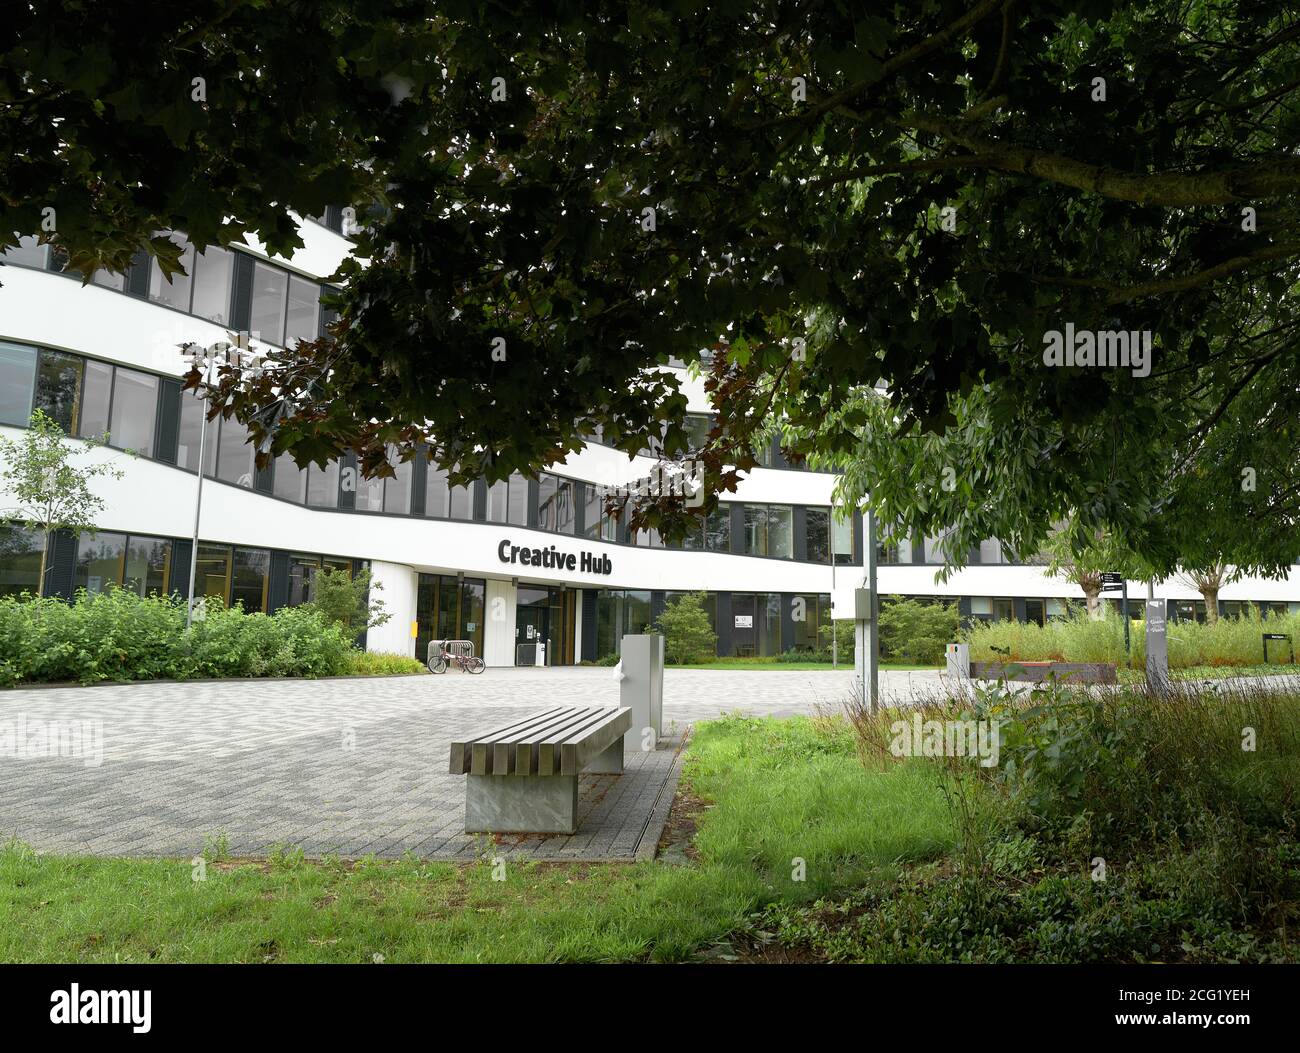 Creative Hub building at the Riverside campus of the University of Northampton (UON), England. Stock Photo